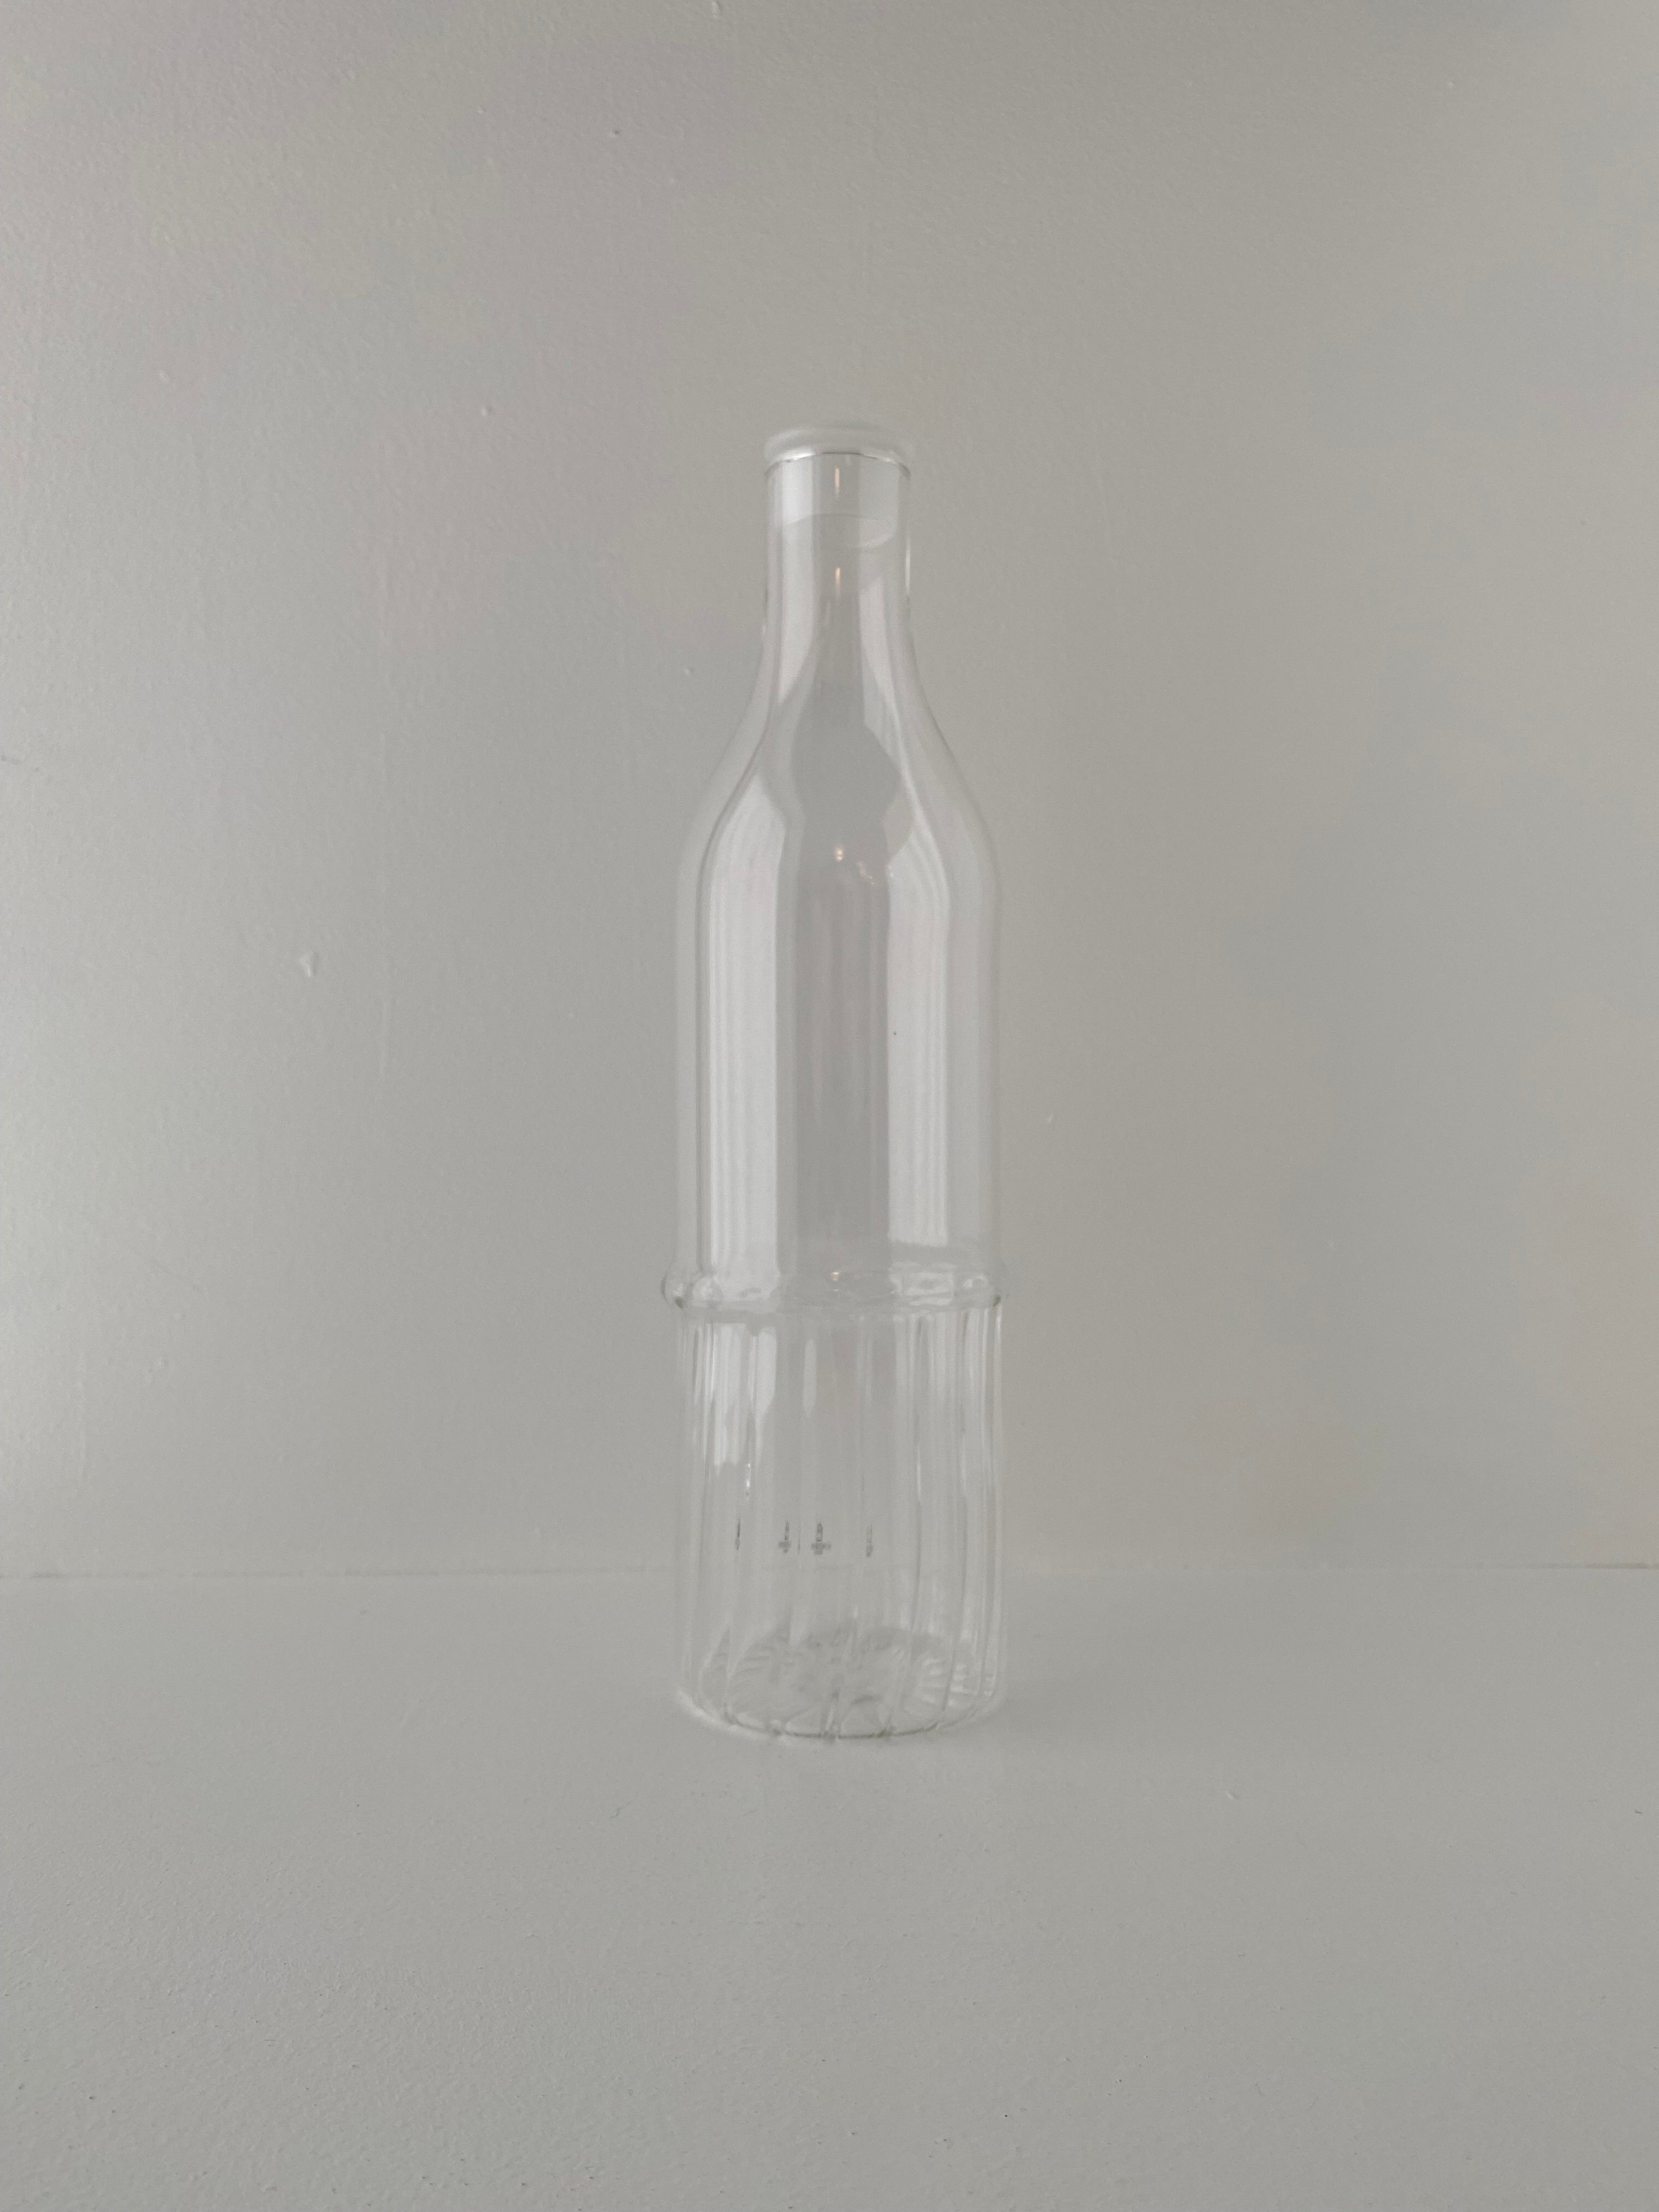 TRANSIT bottle